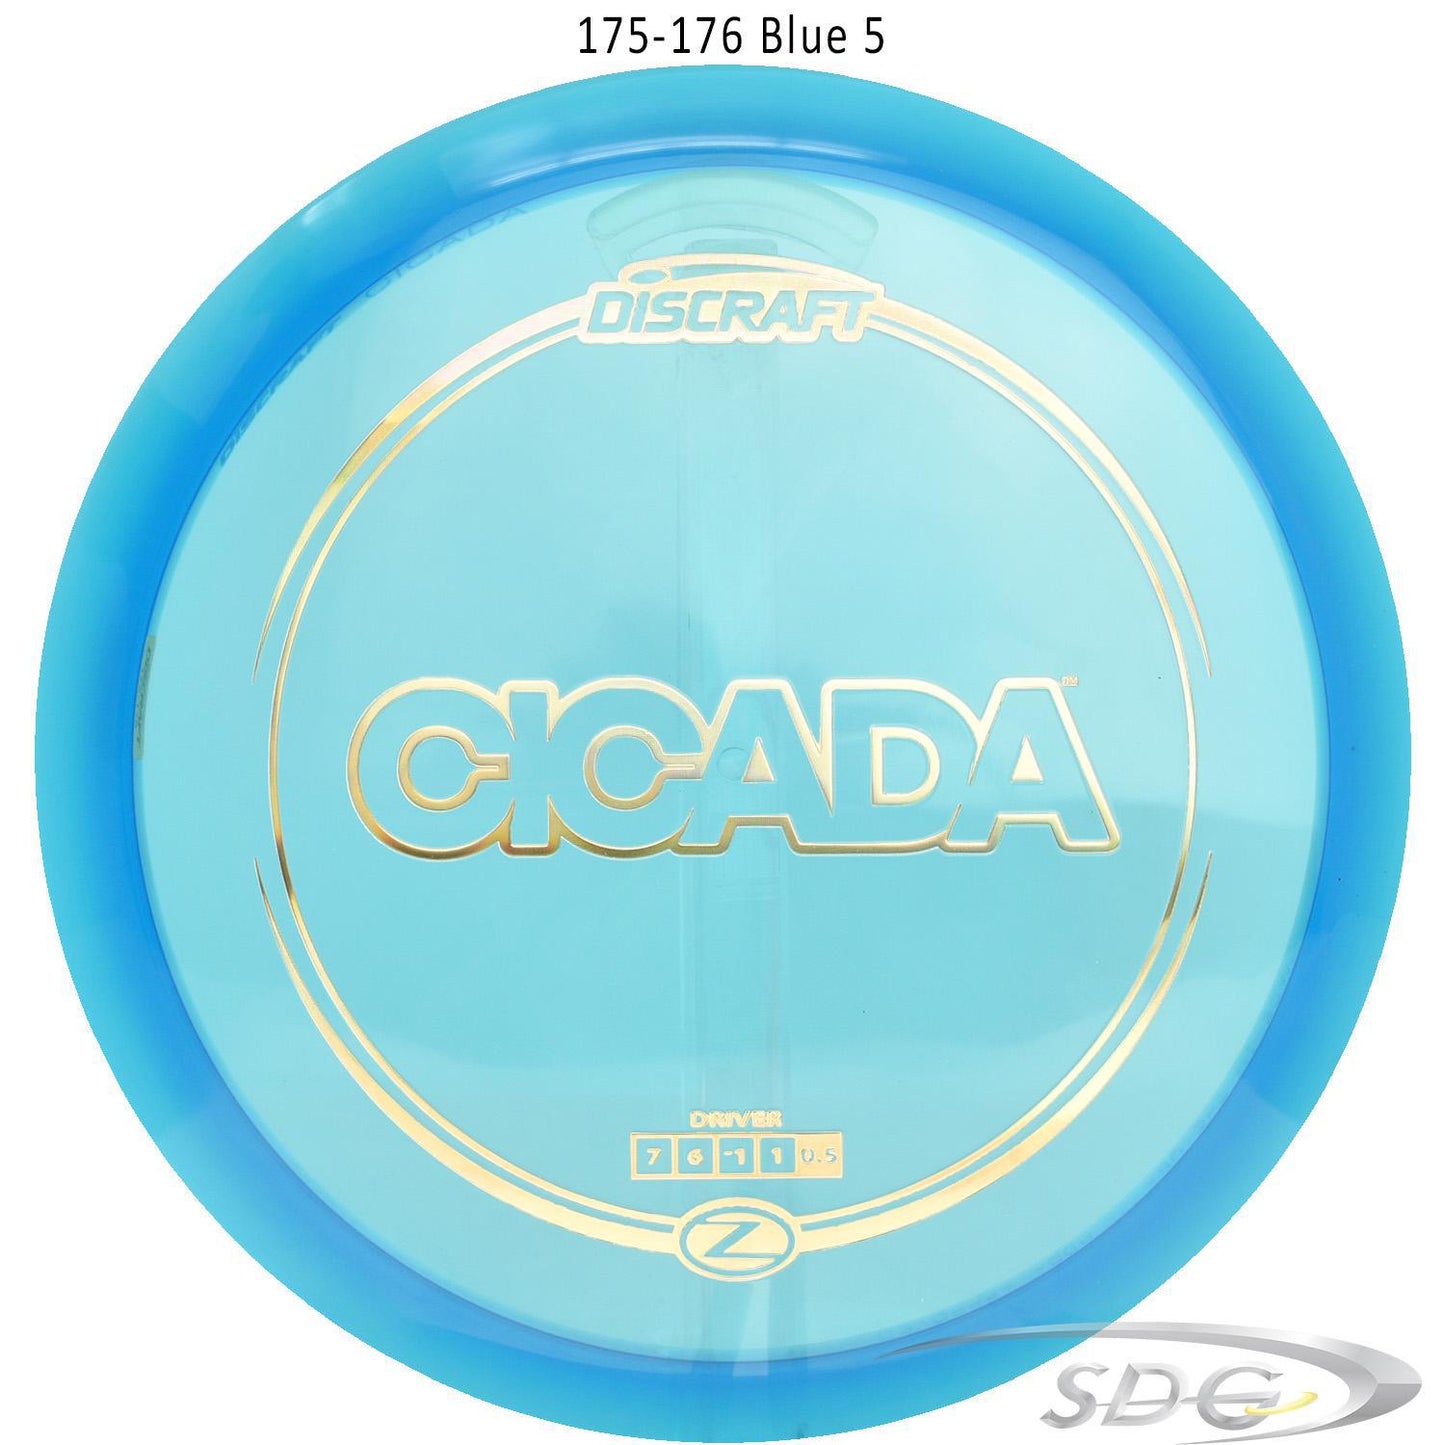 discraft-z-line-cicada-disc-golf-fairway-driver 175-176 Blue 5